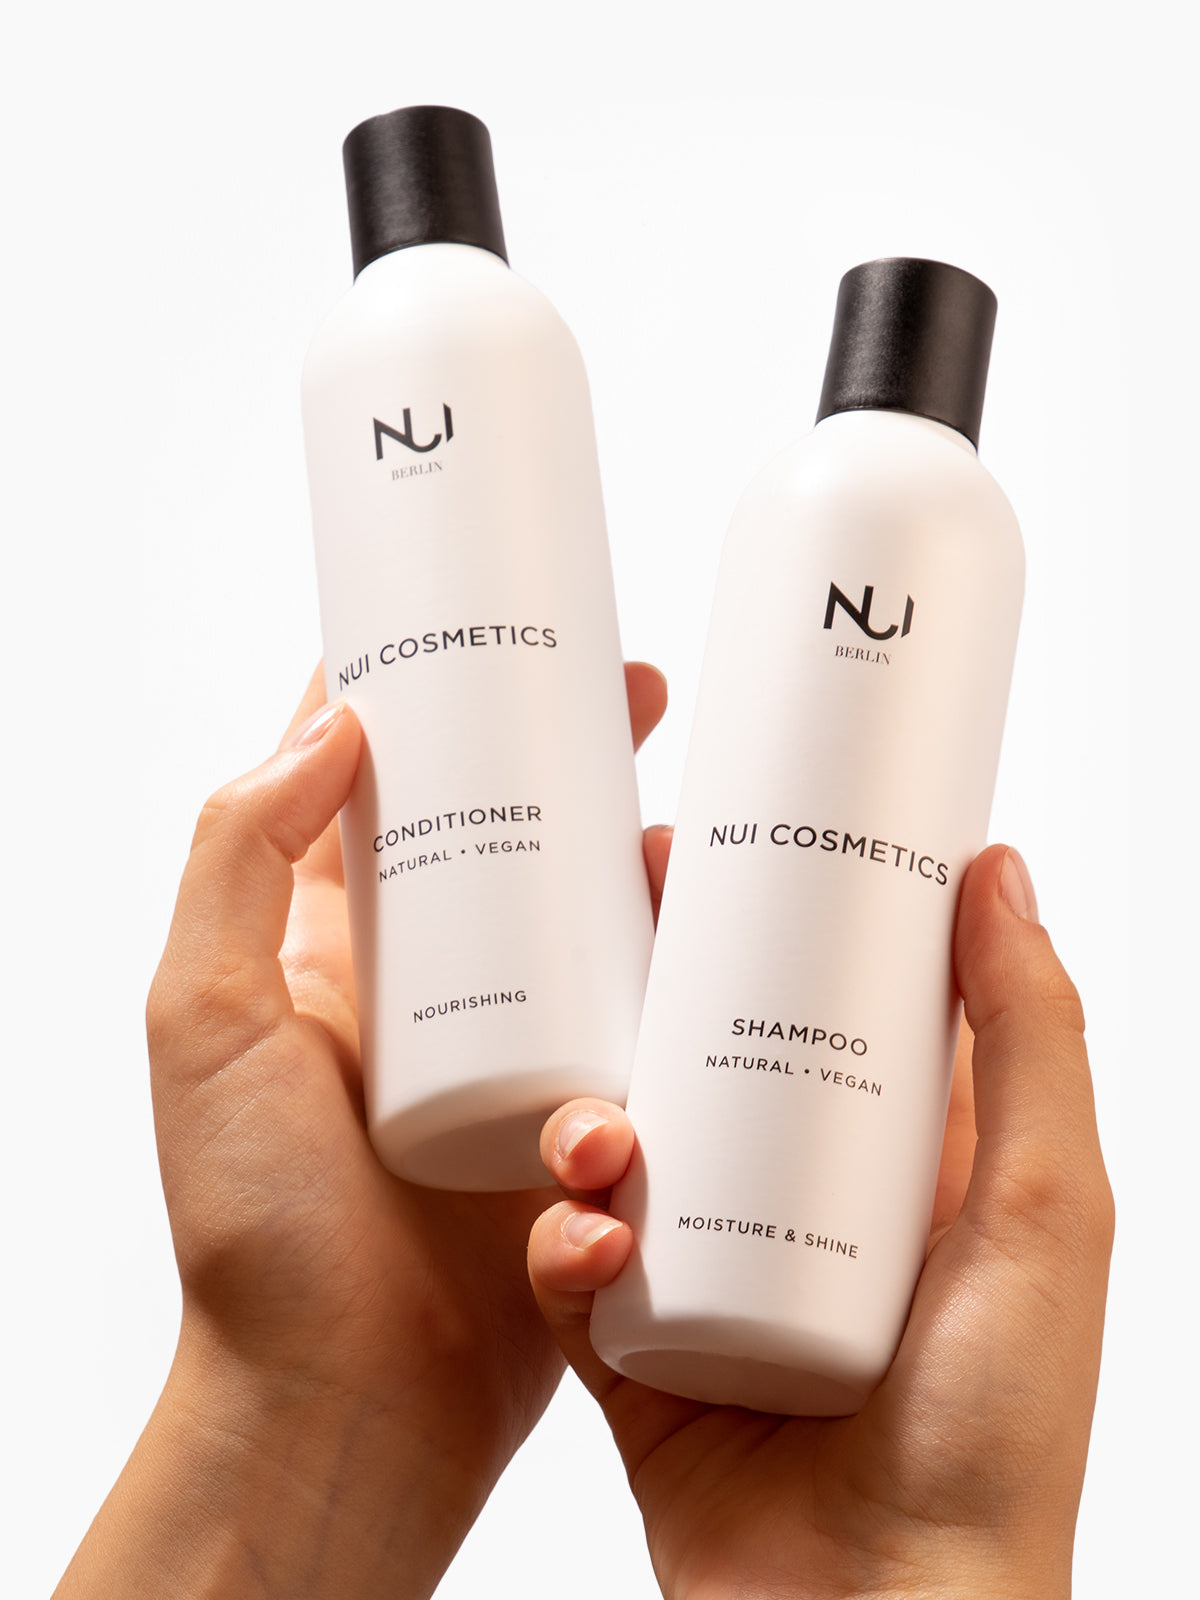 NUI Shampoo Natural & vegan Moisture & Shine